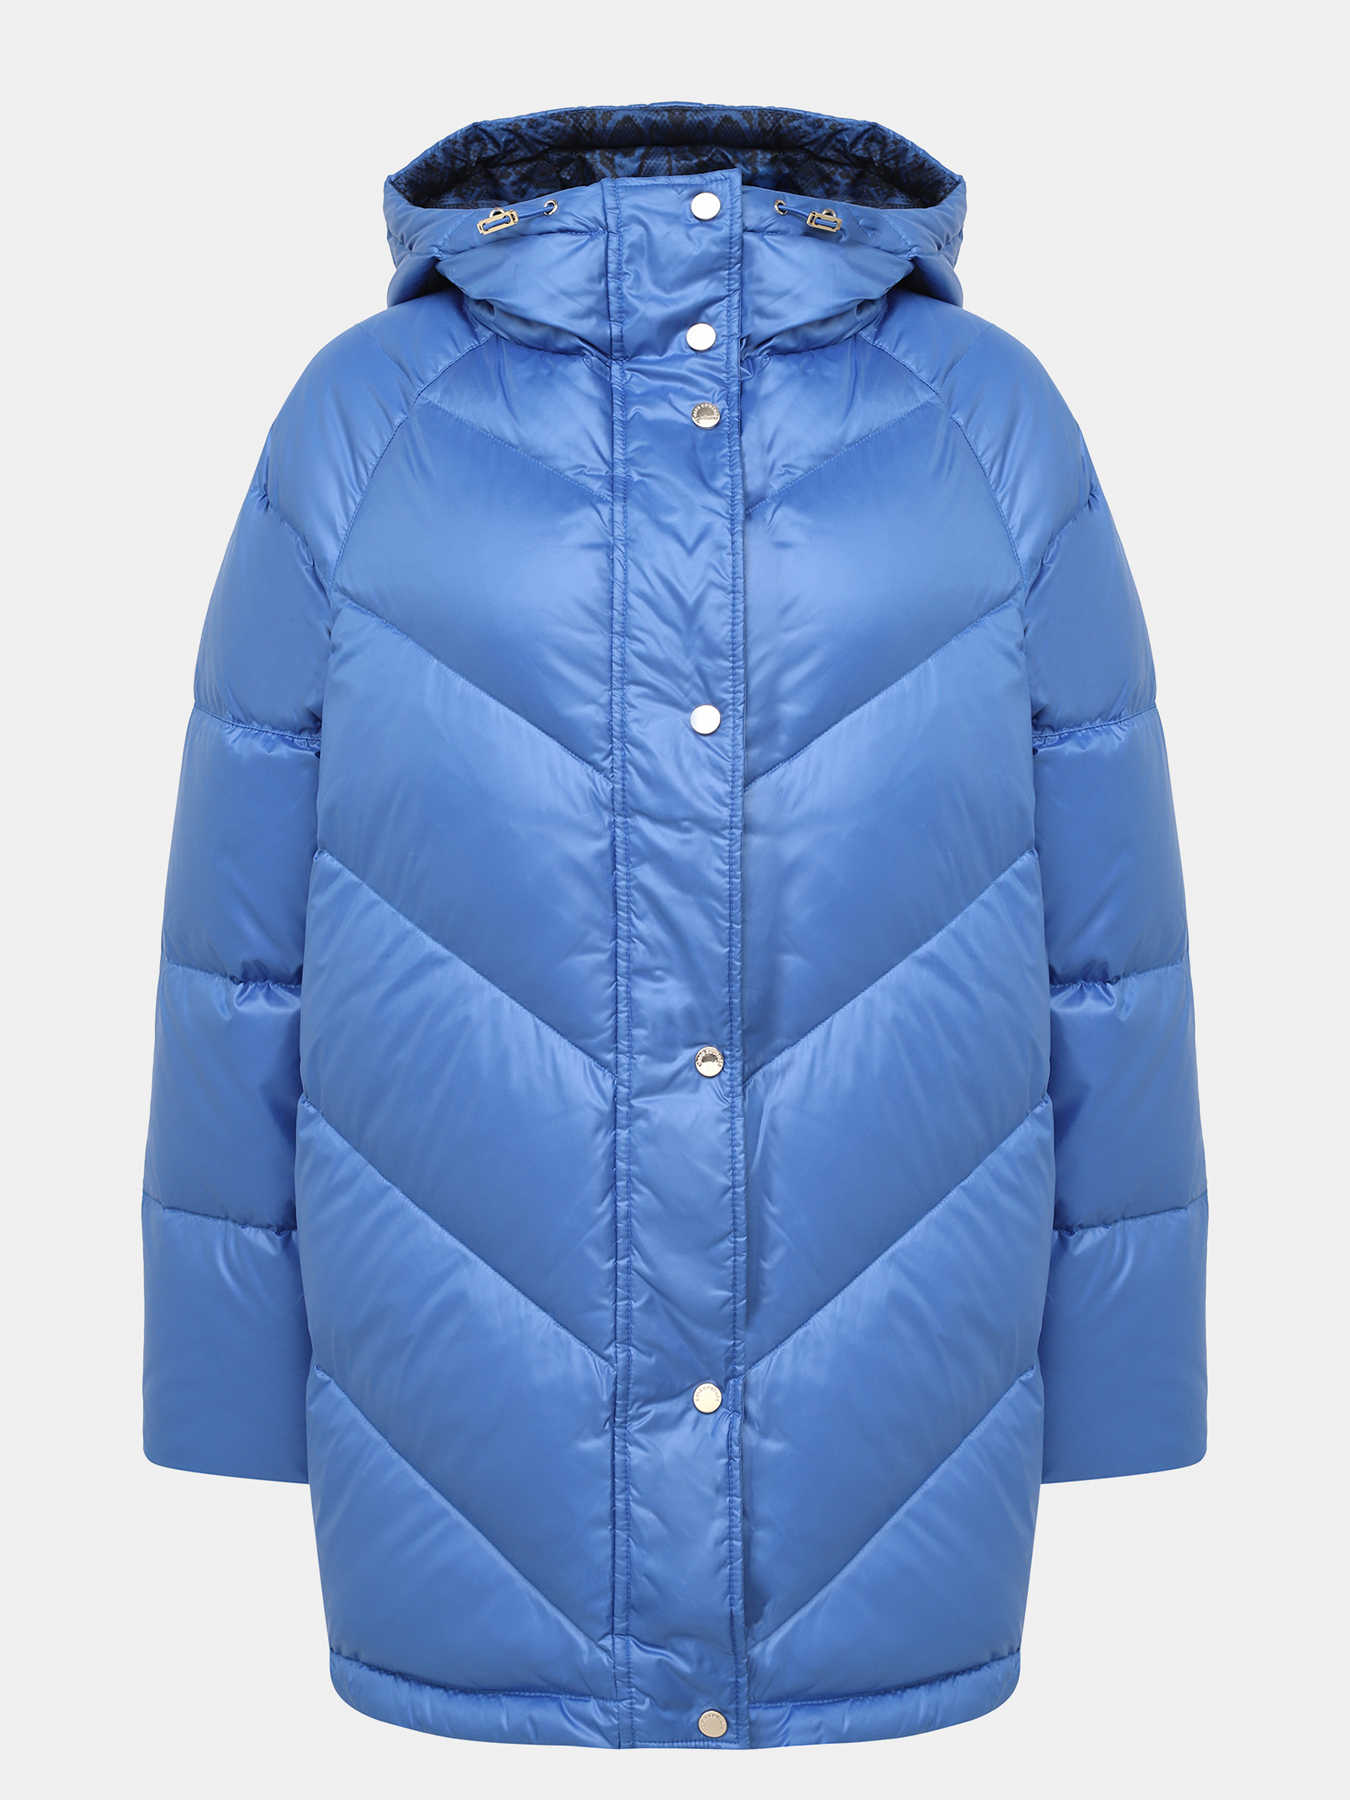 Куртка ORSA Couture 367408-022, цвет синий, размер 44 - фото 1